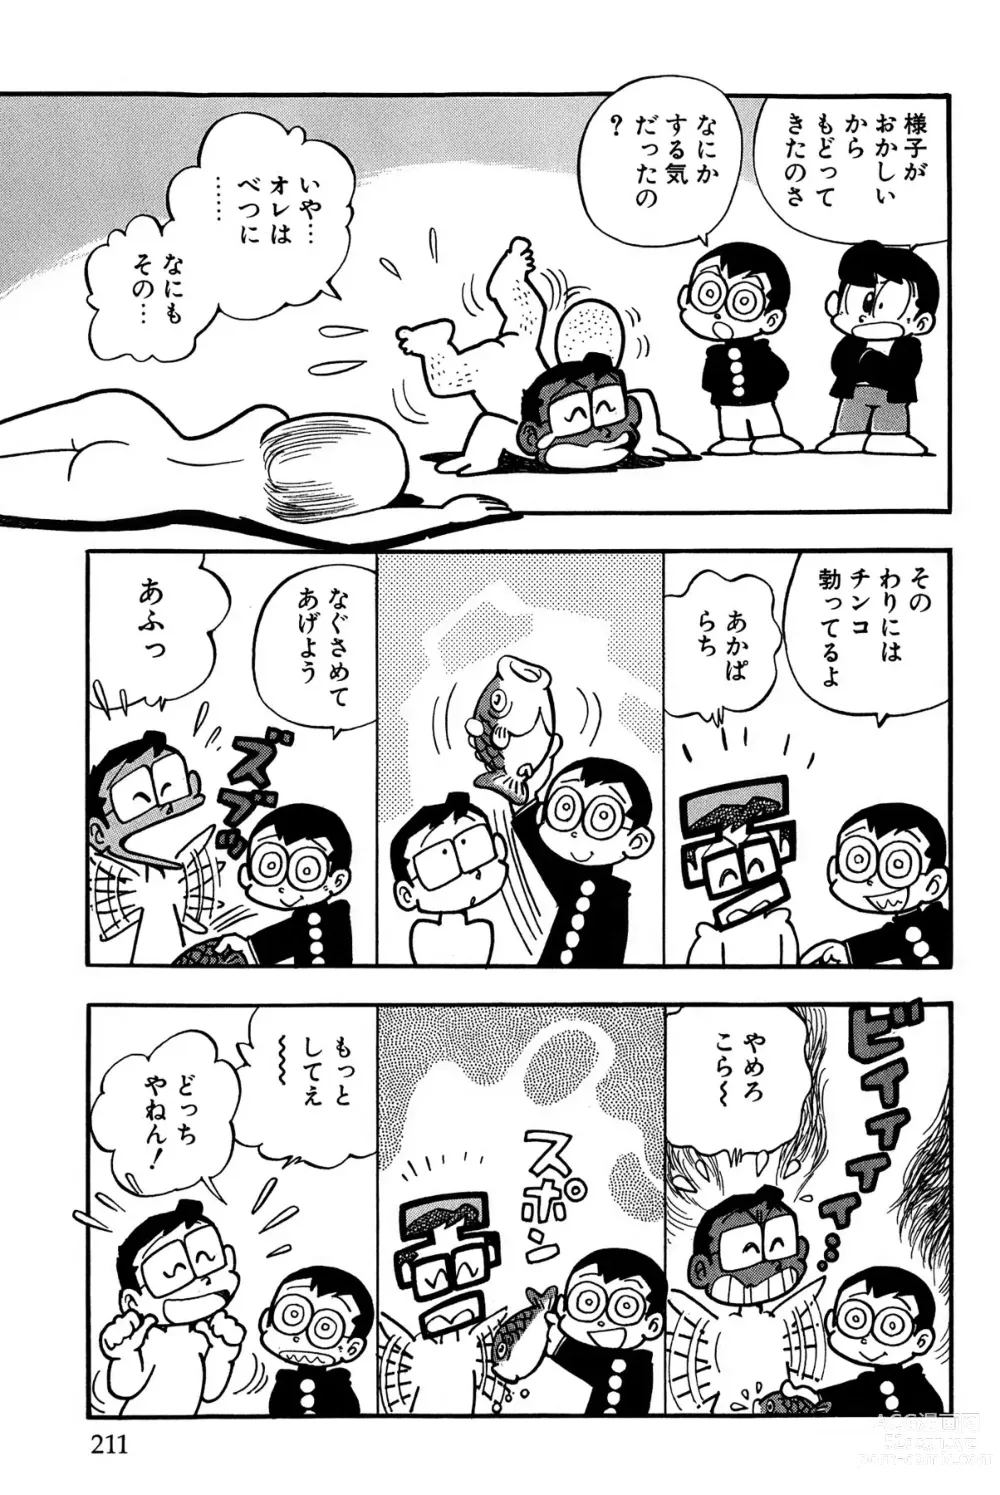 Page 215 of manga Maichiingu Machiko Sensei book pink